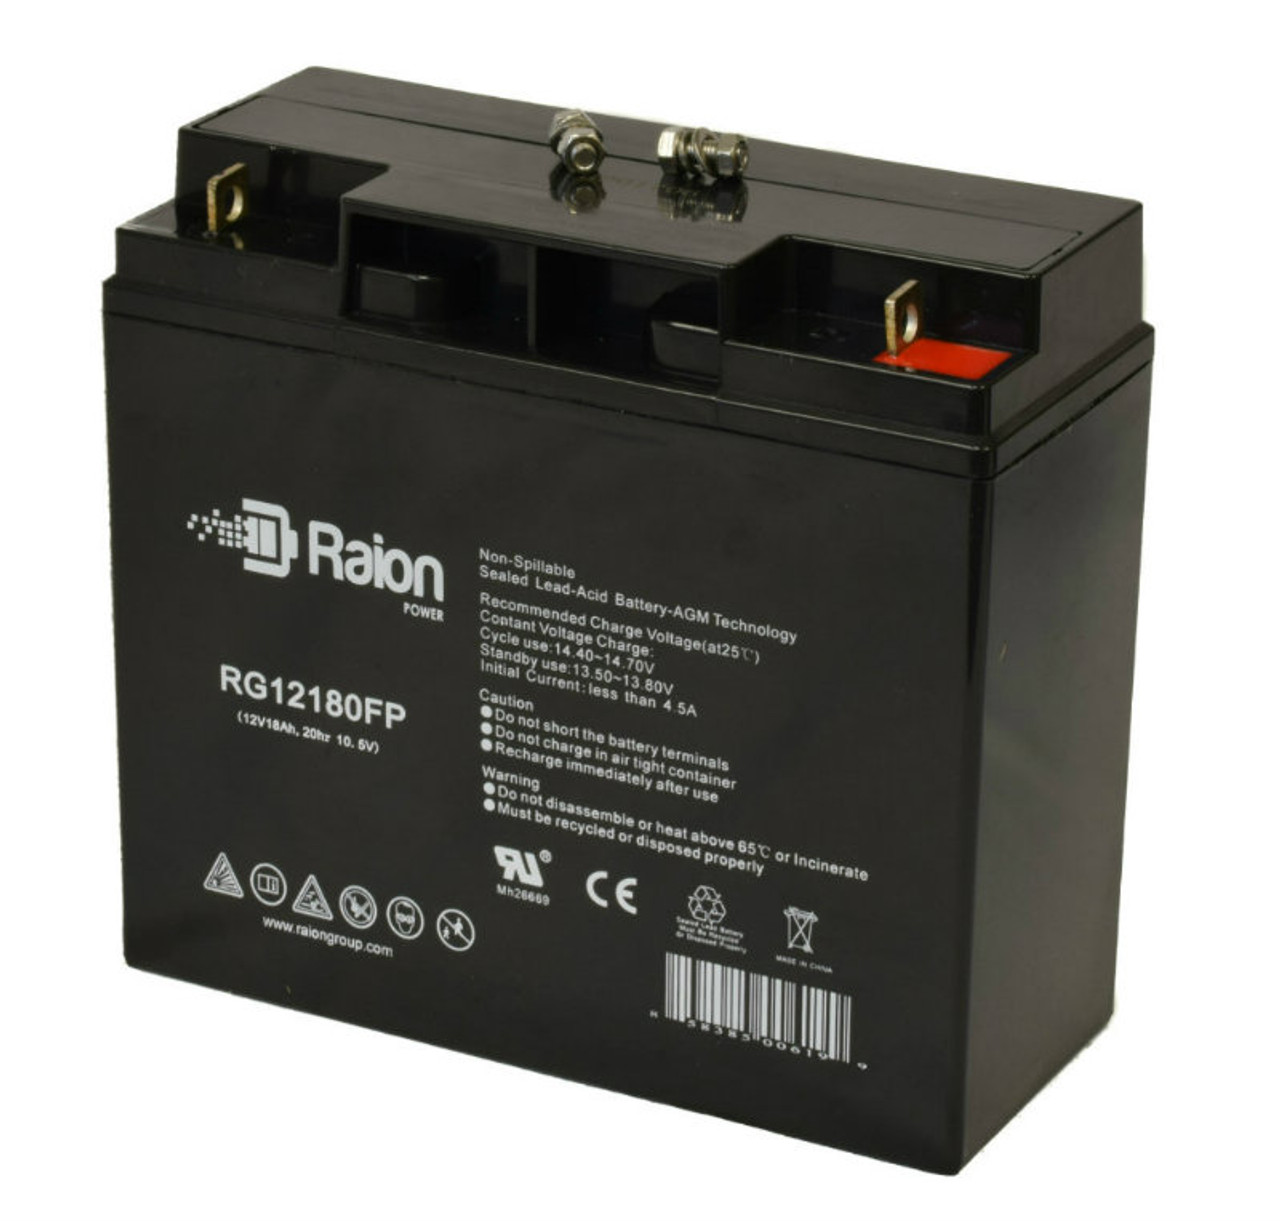 Raion Power Replacement 12V 18Ah Battery for Wagan Tech 2412 Jump Starter - 1 Pack